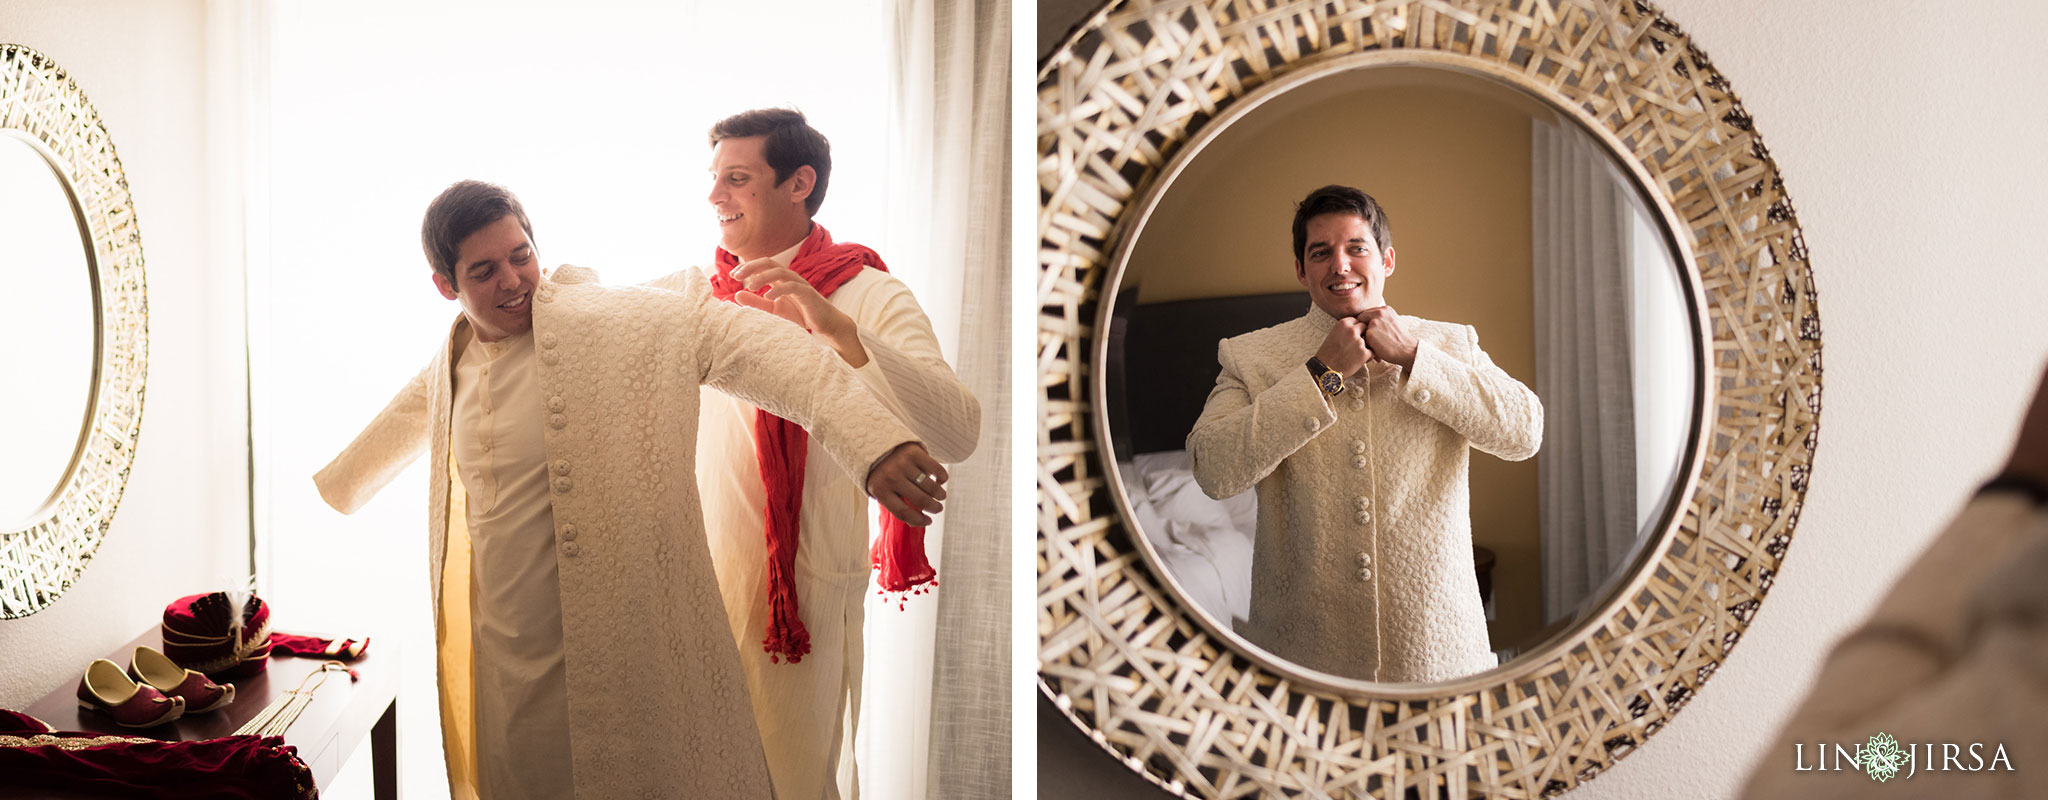 28 newport beach marriott hotel indian wedding groom photography